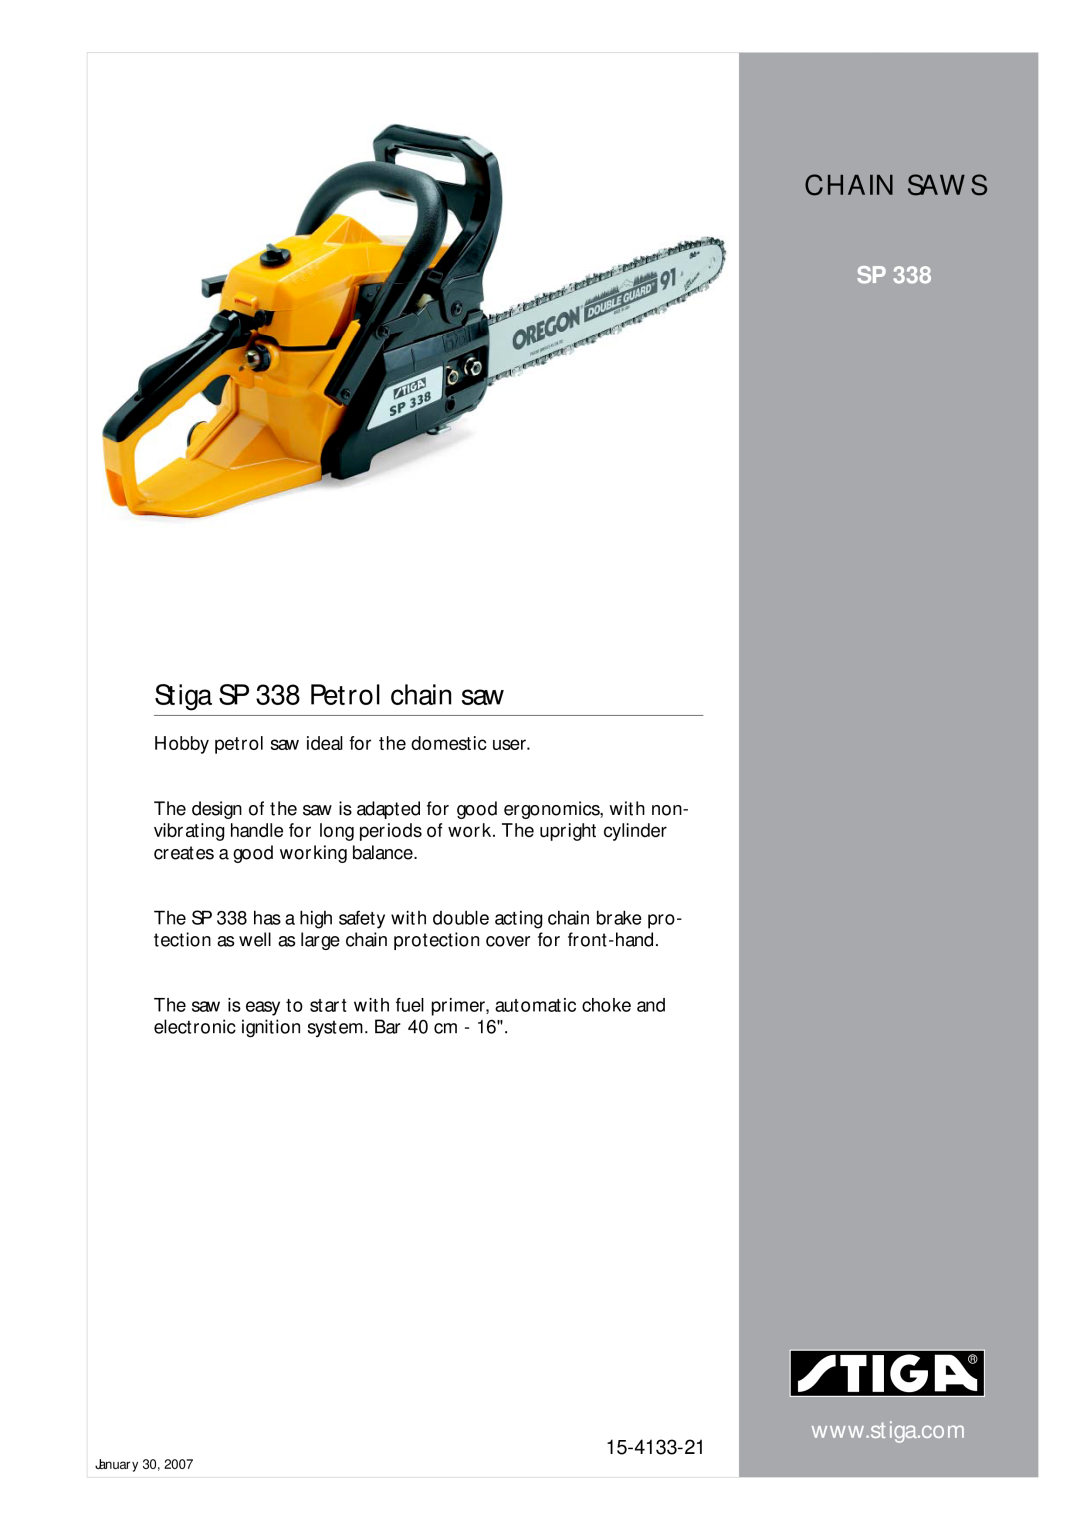 Stiga manual Stiga SP 338 Petrol chain saw, Chain Saws, 15-4133-21 